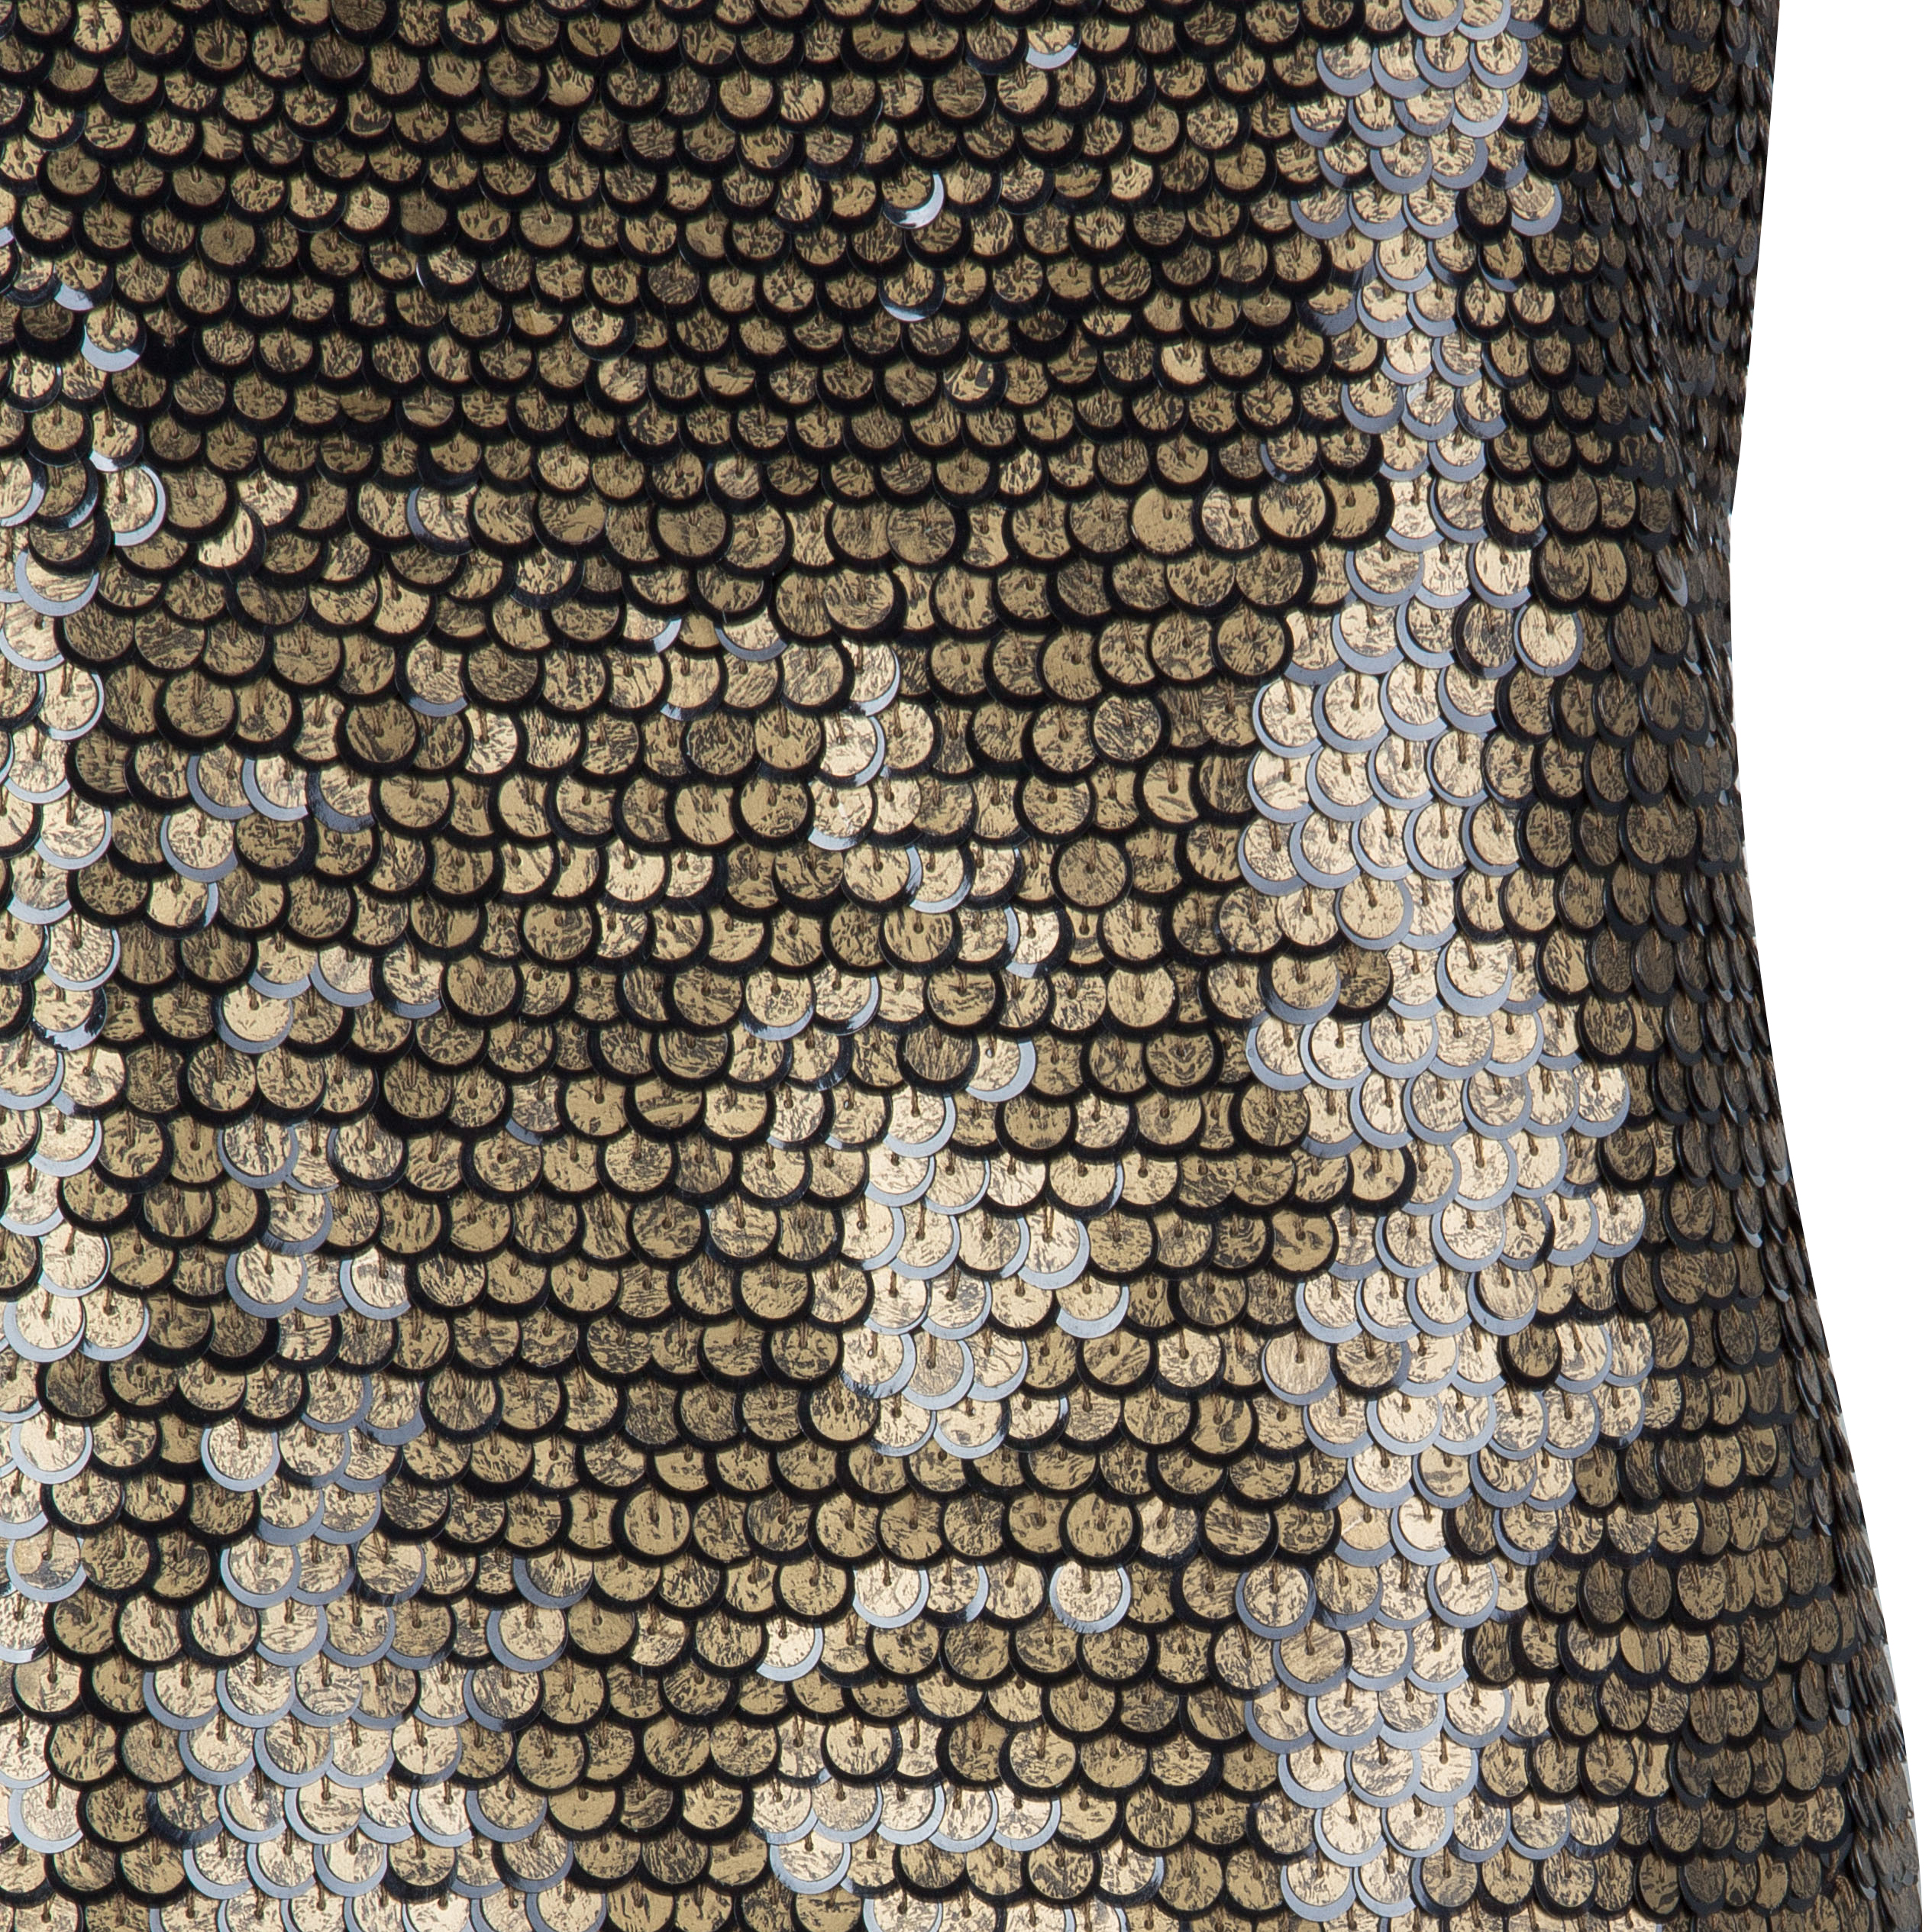 Pre-owned Diane Von Furstenberg Gold Sequin Embellished Sleeveless Chika Dress M